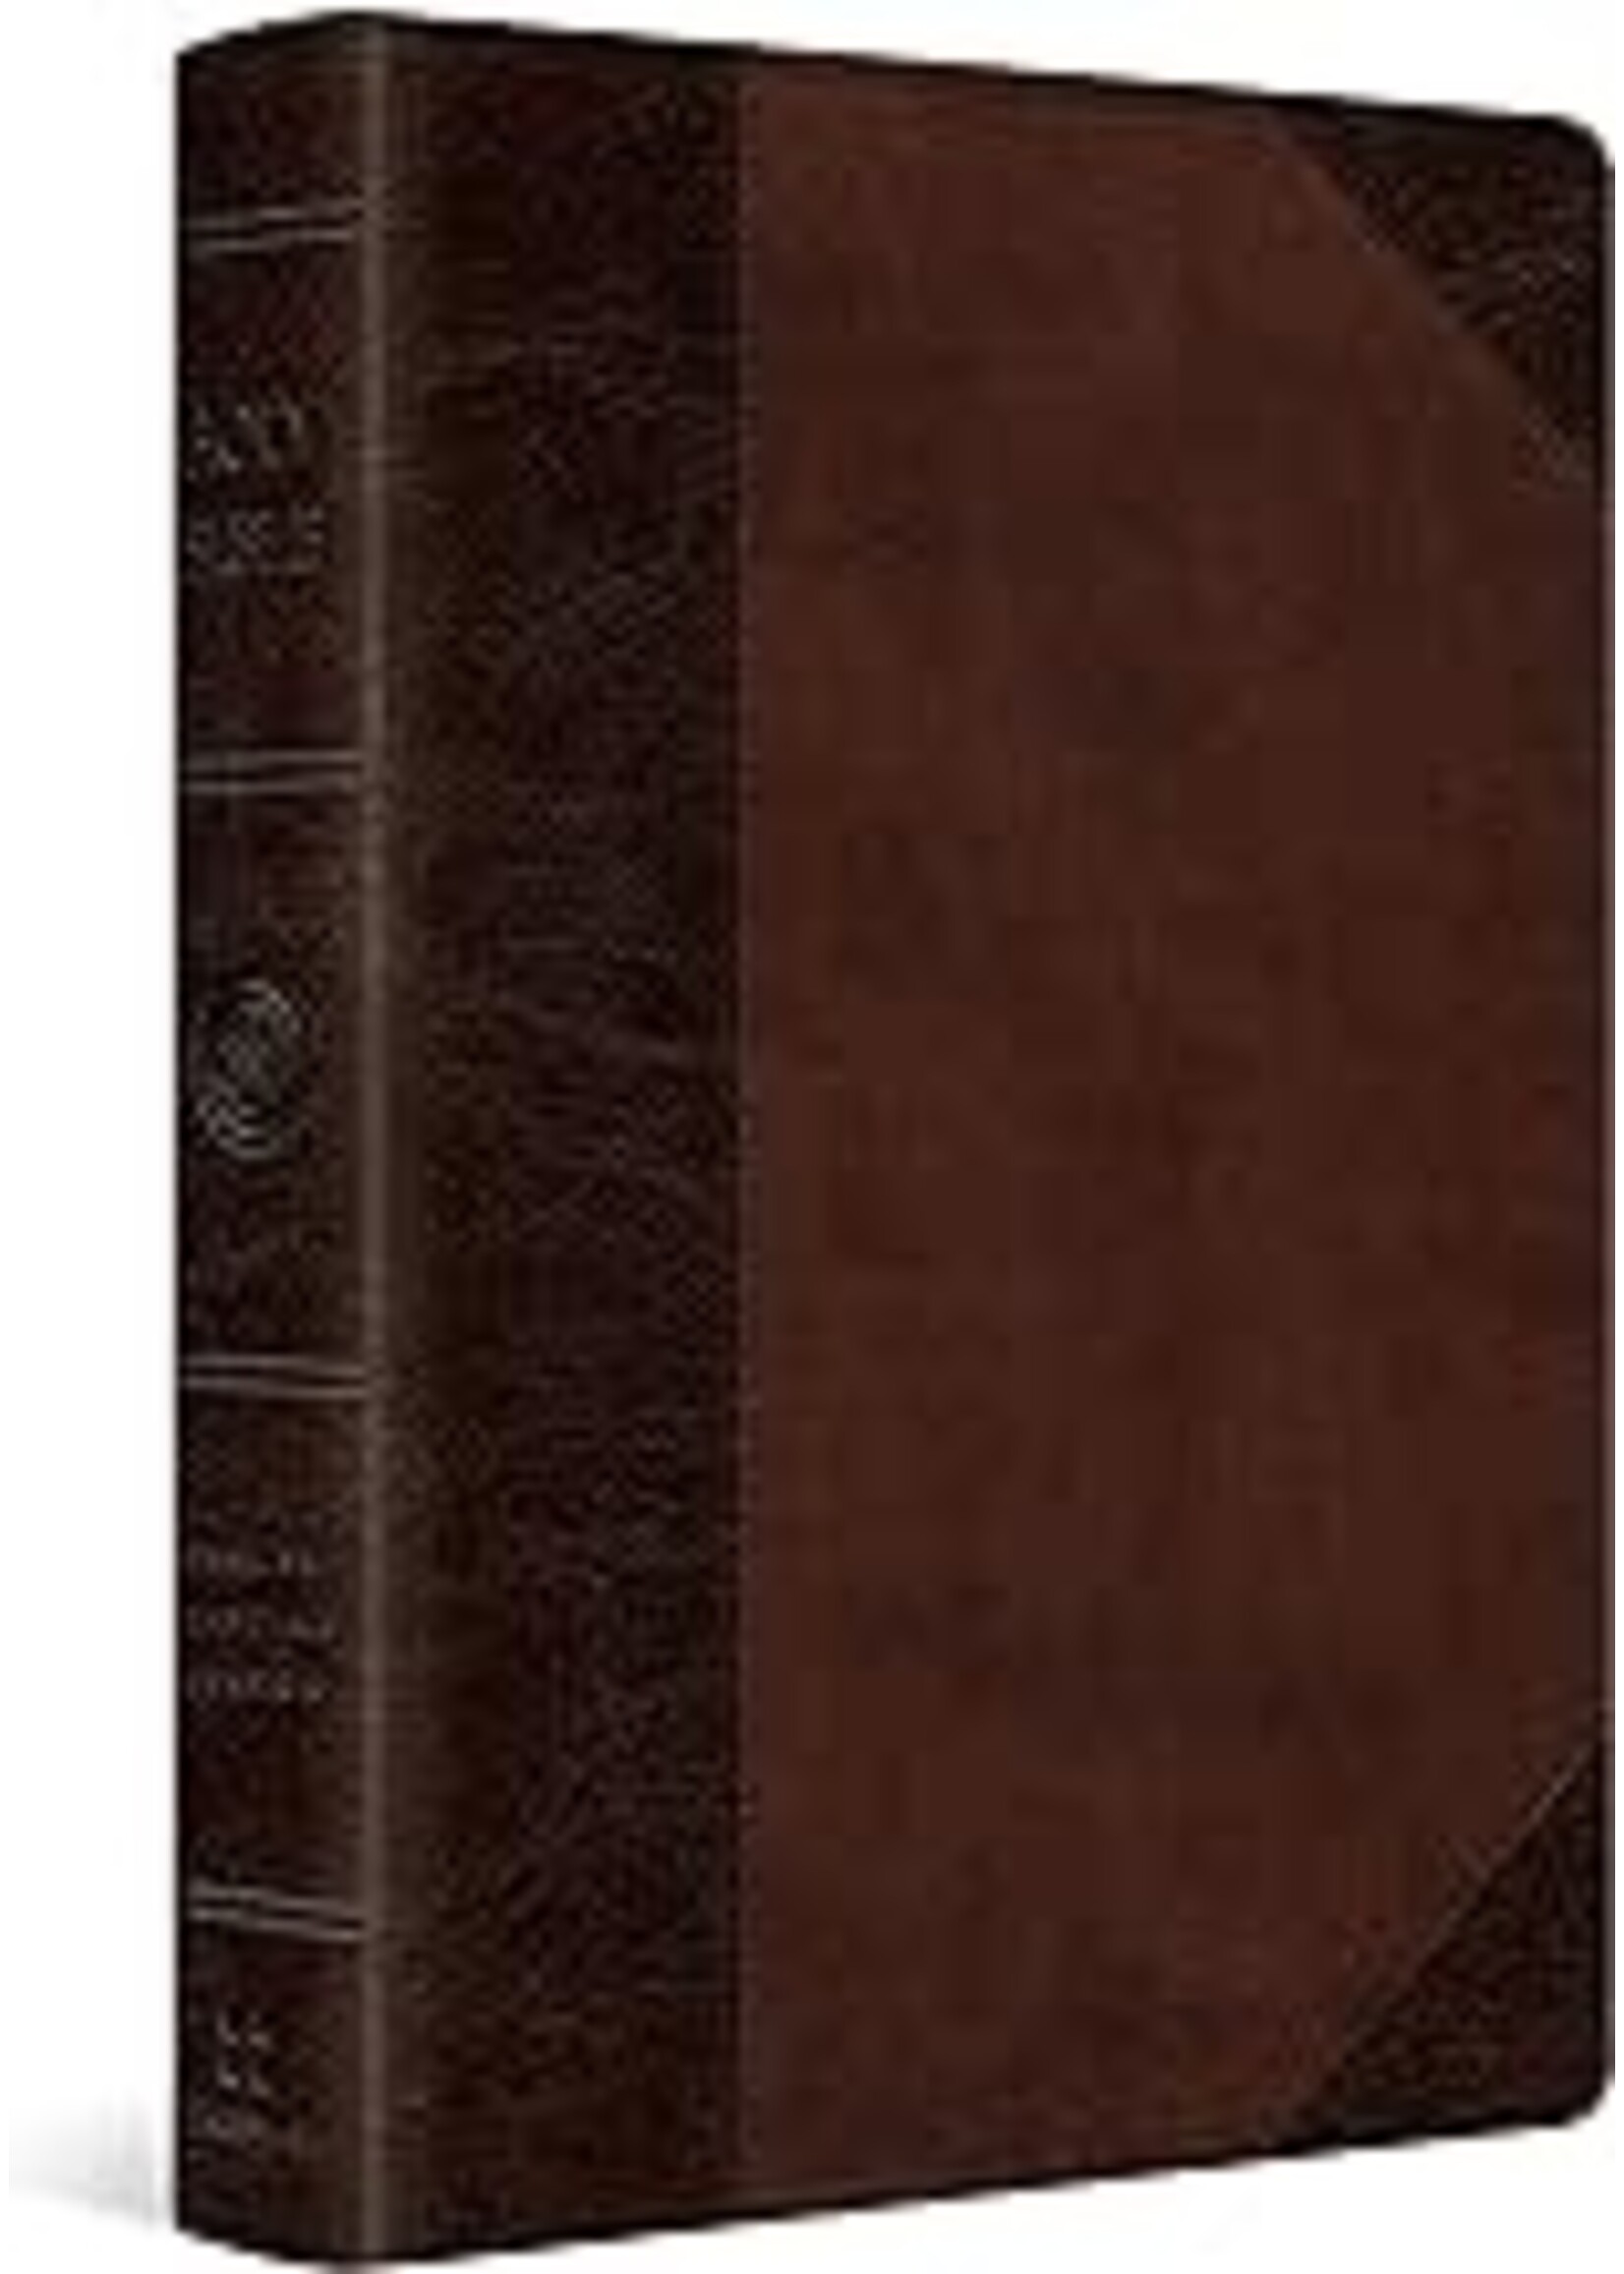 ESV Personal Reference Bible-Brown/Walnut Portfolio Design TruTone